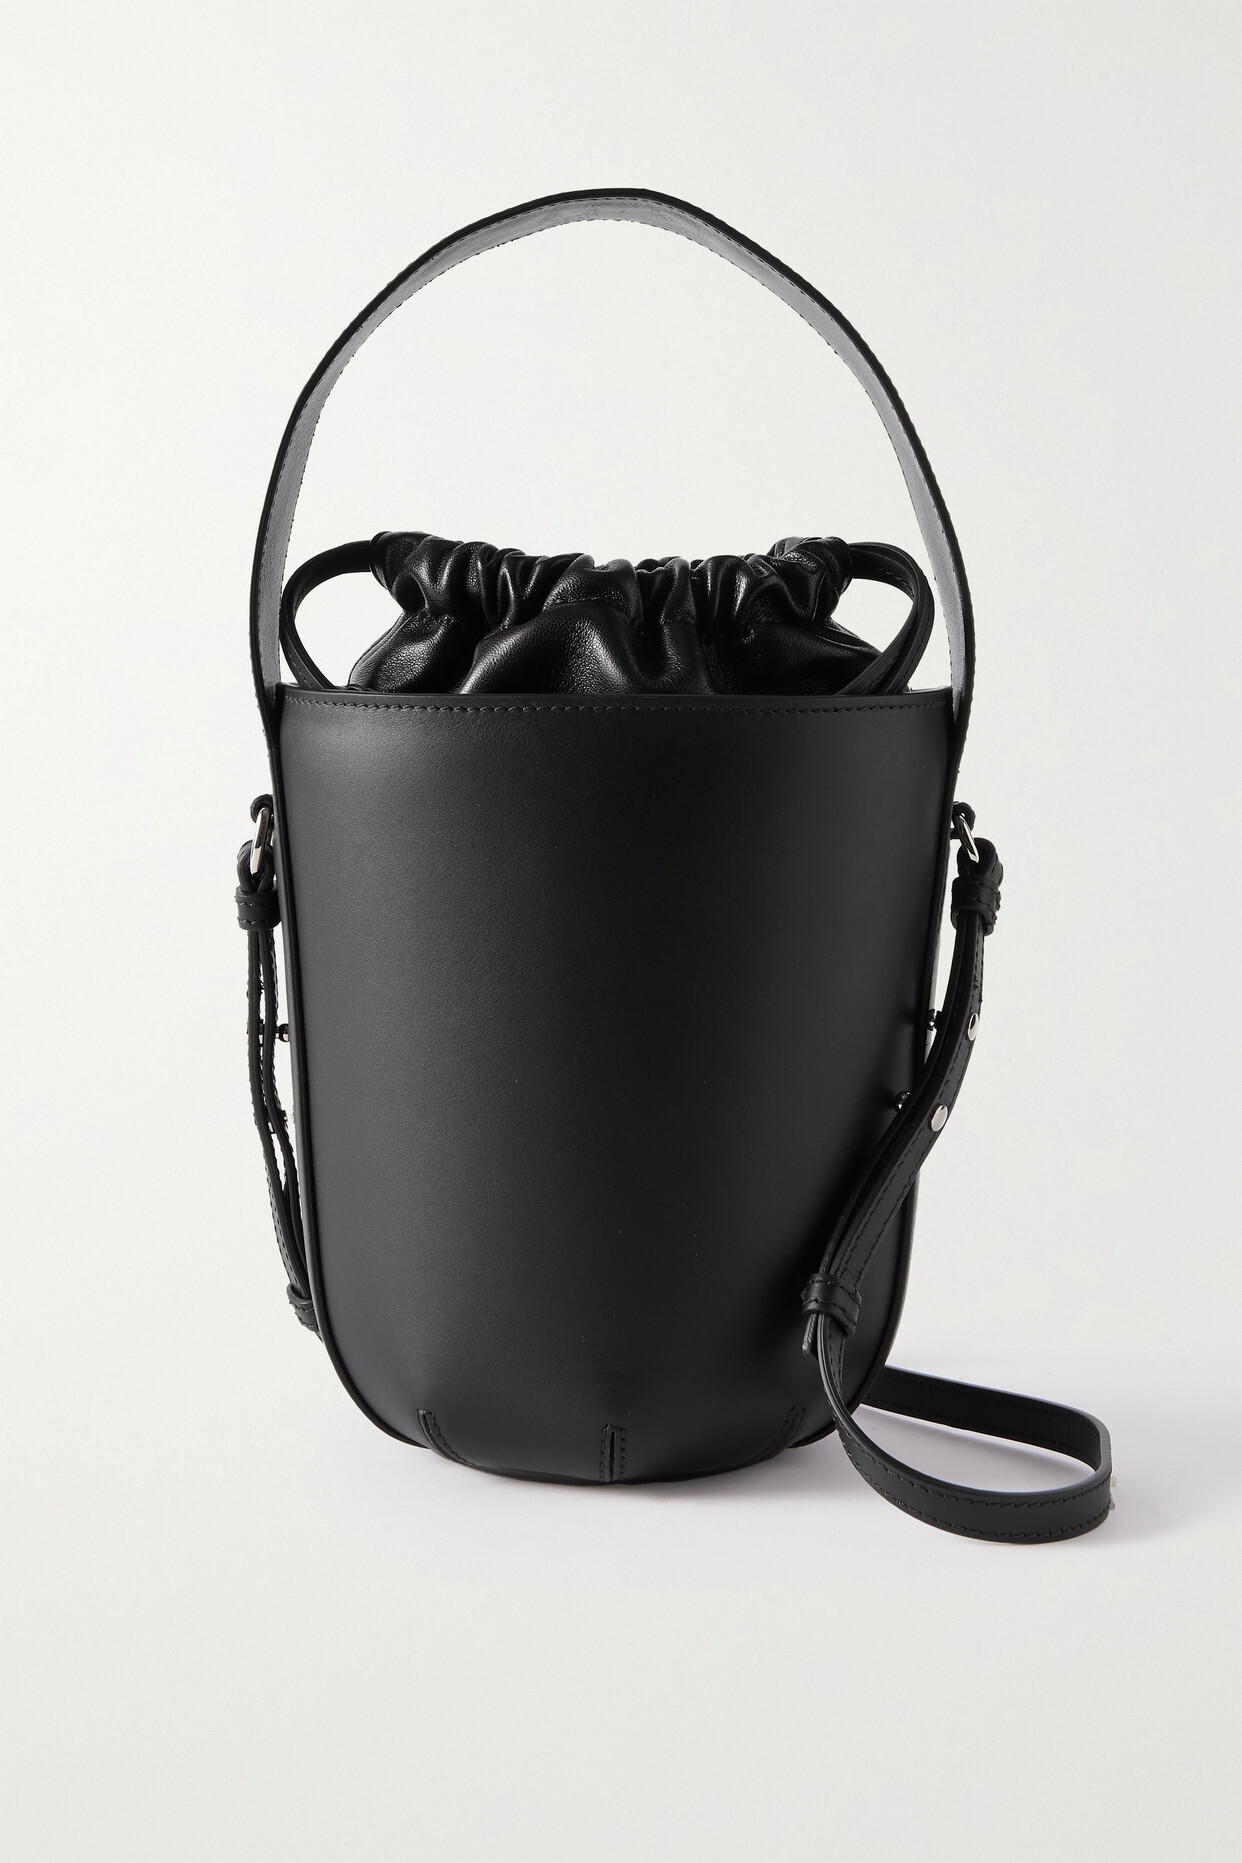 Chloé Chloé - + Net Sustain Sense Embroidered Leather Bucket Bag - Black